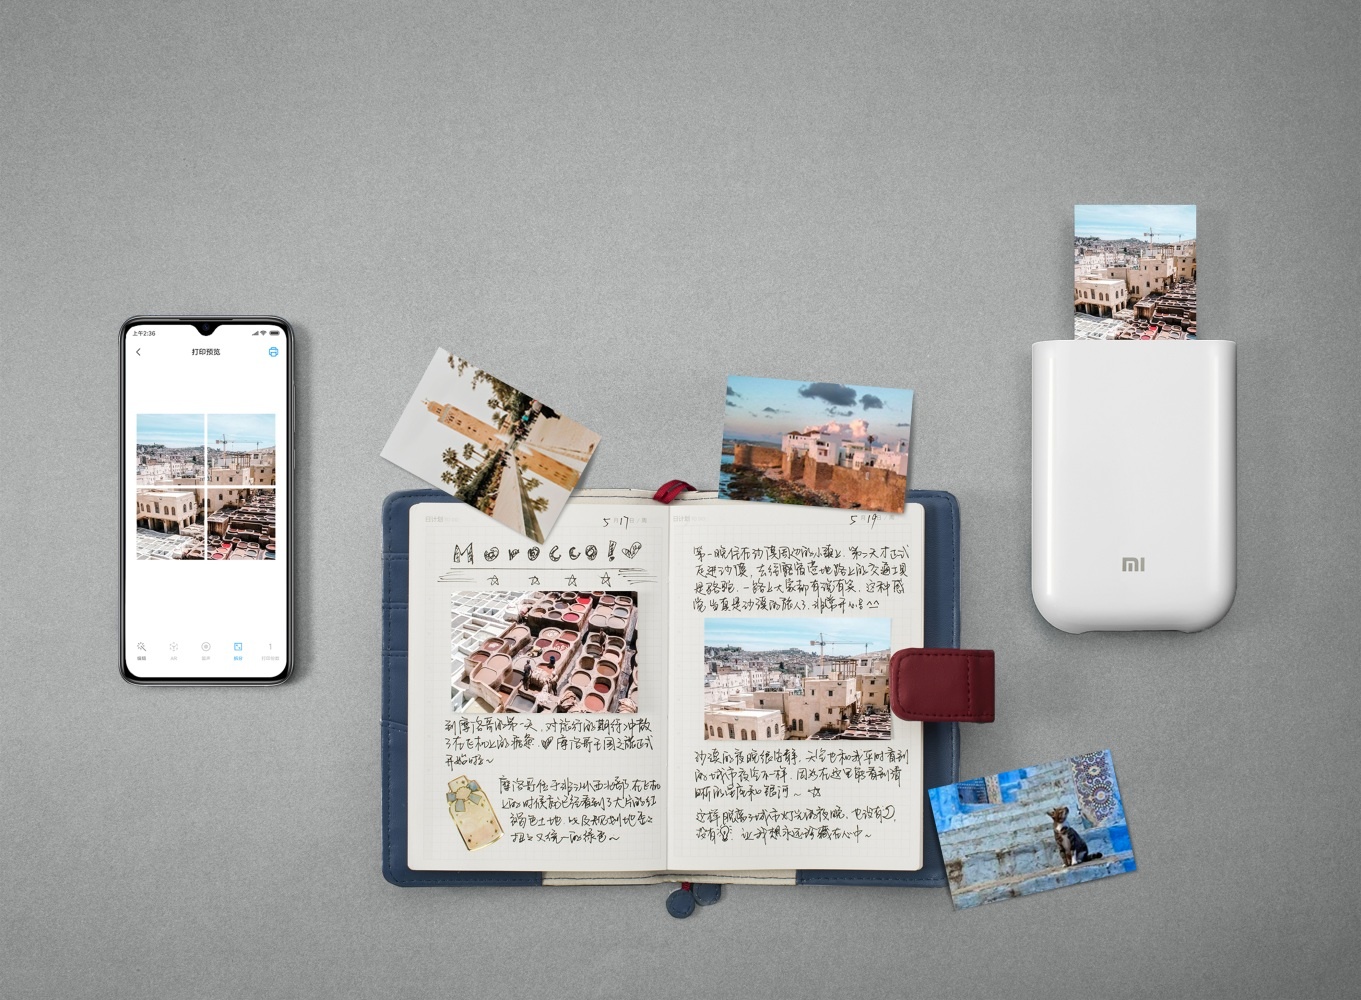 Xiaomi Imprimante Photo Portable Xiaomi Mi Avec Impression De